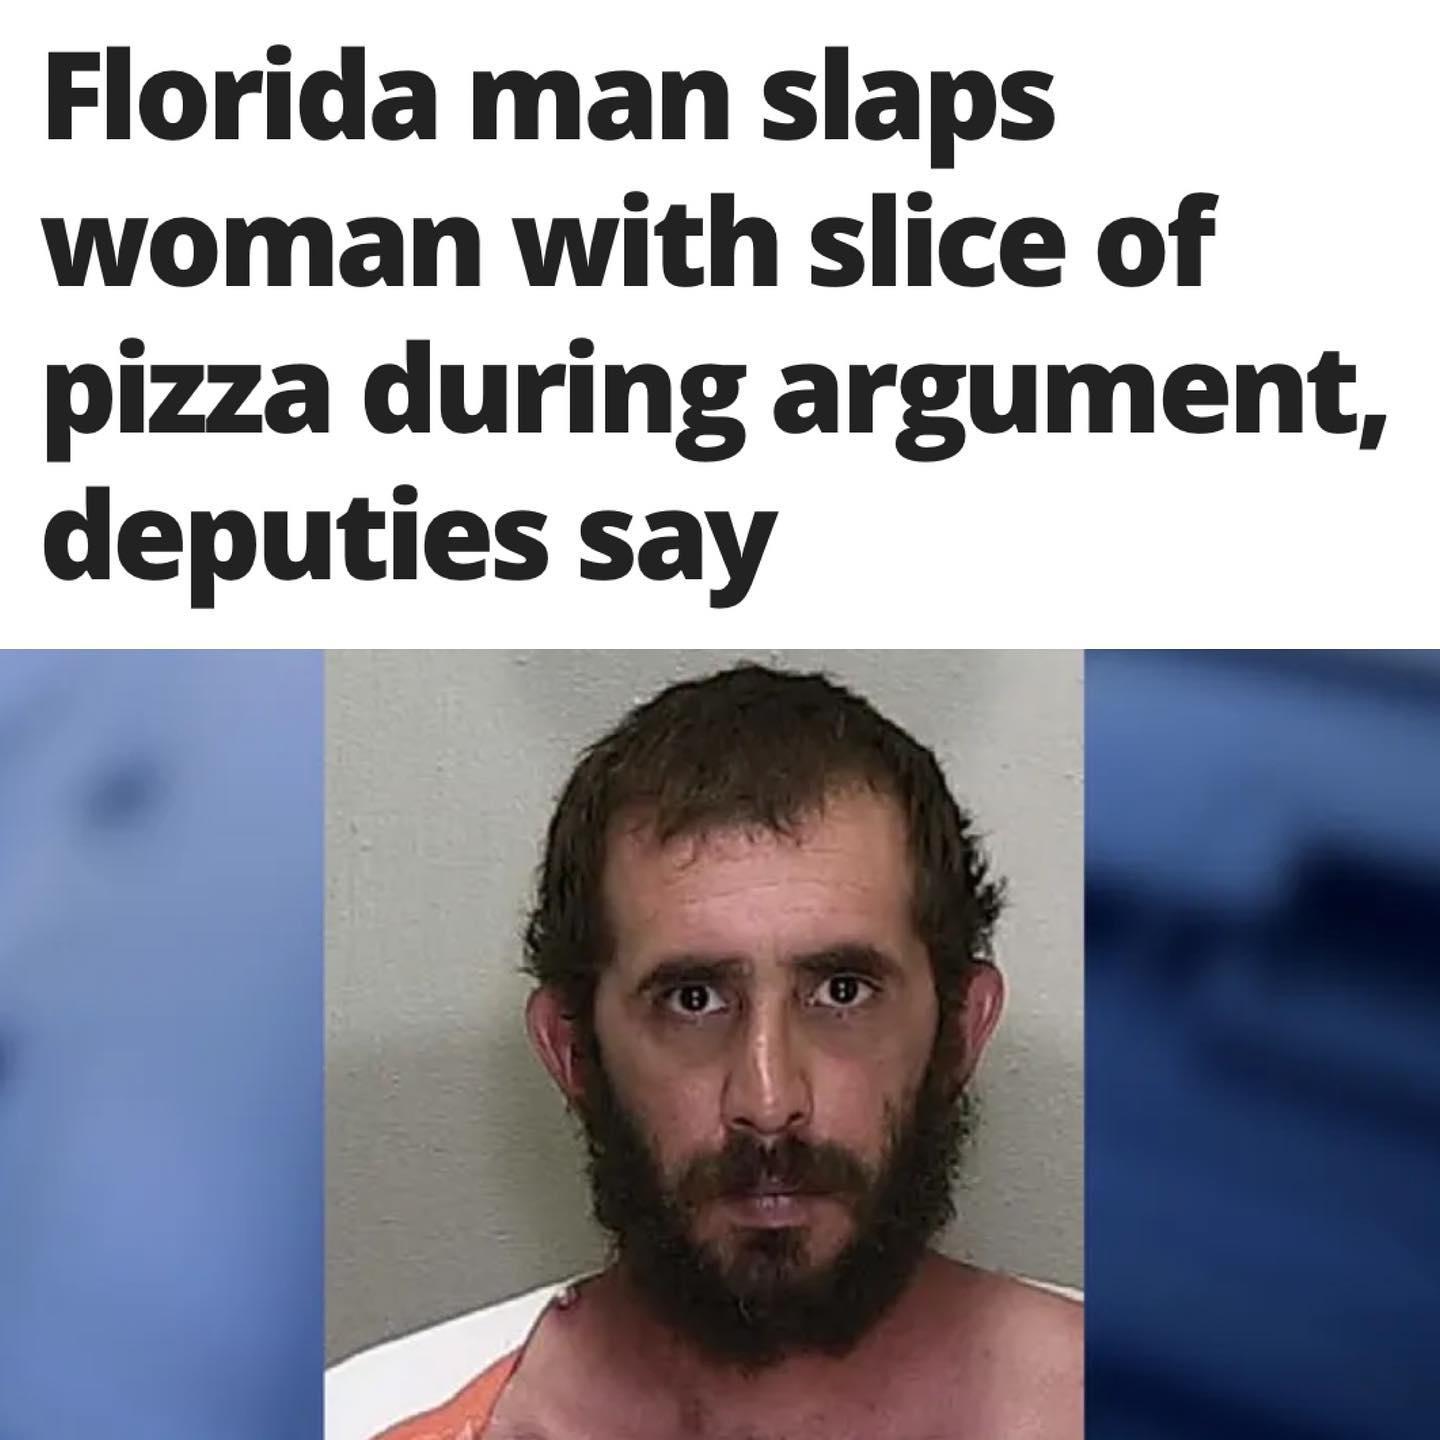 florida-man-slaps-woman-with-pizza-mugshot